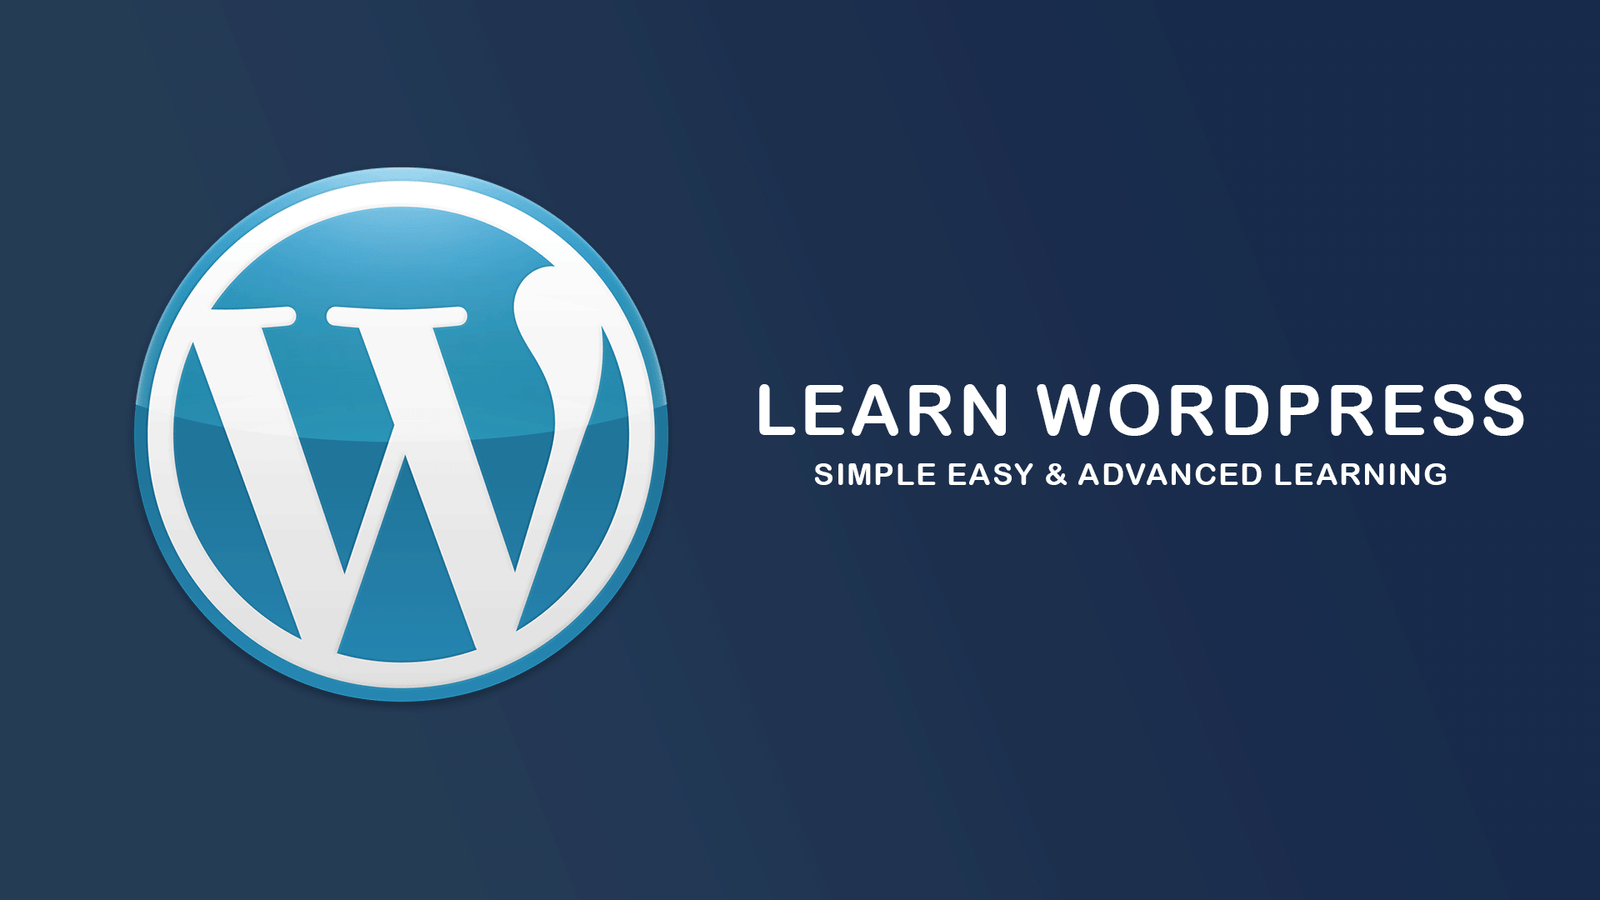 What Is Wordpress #1